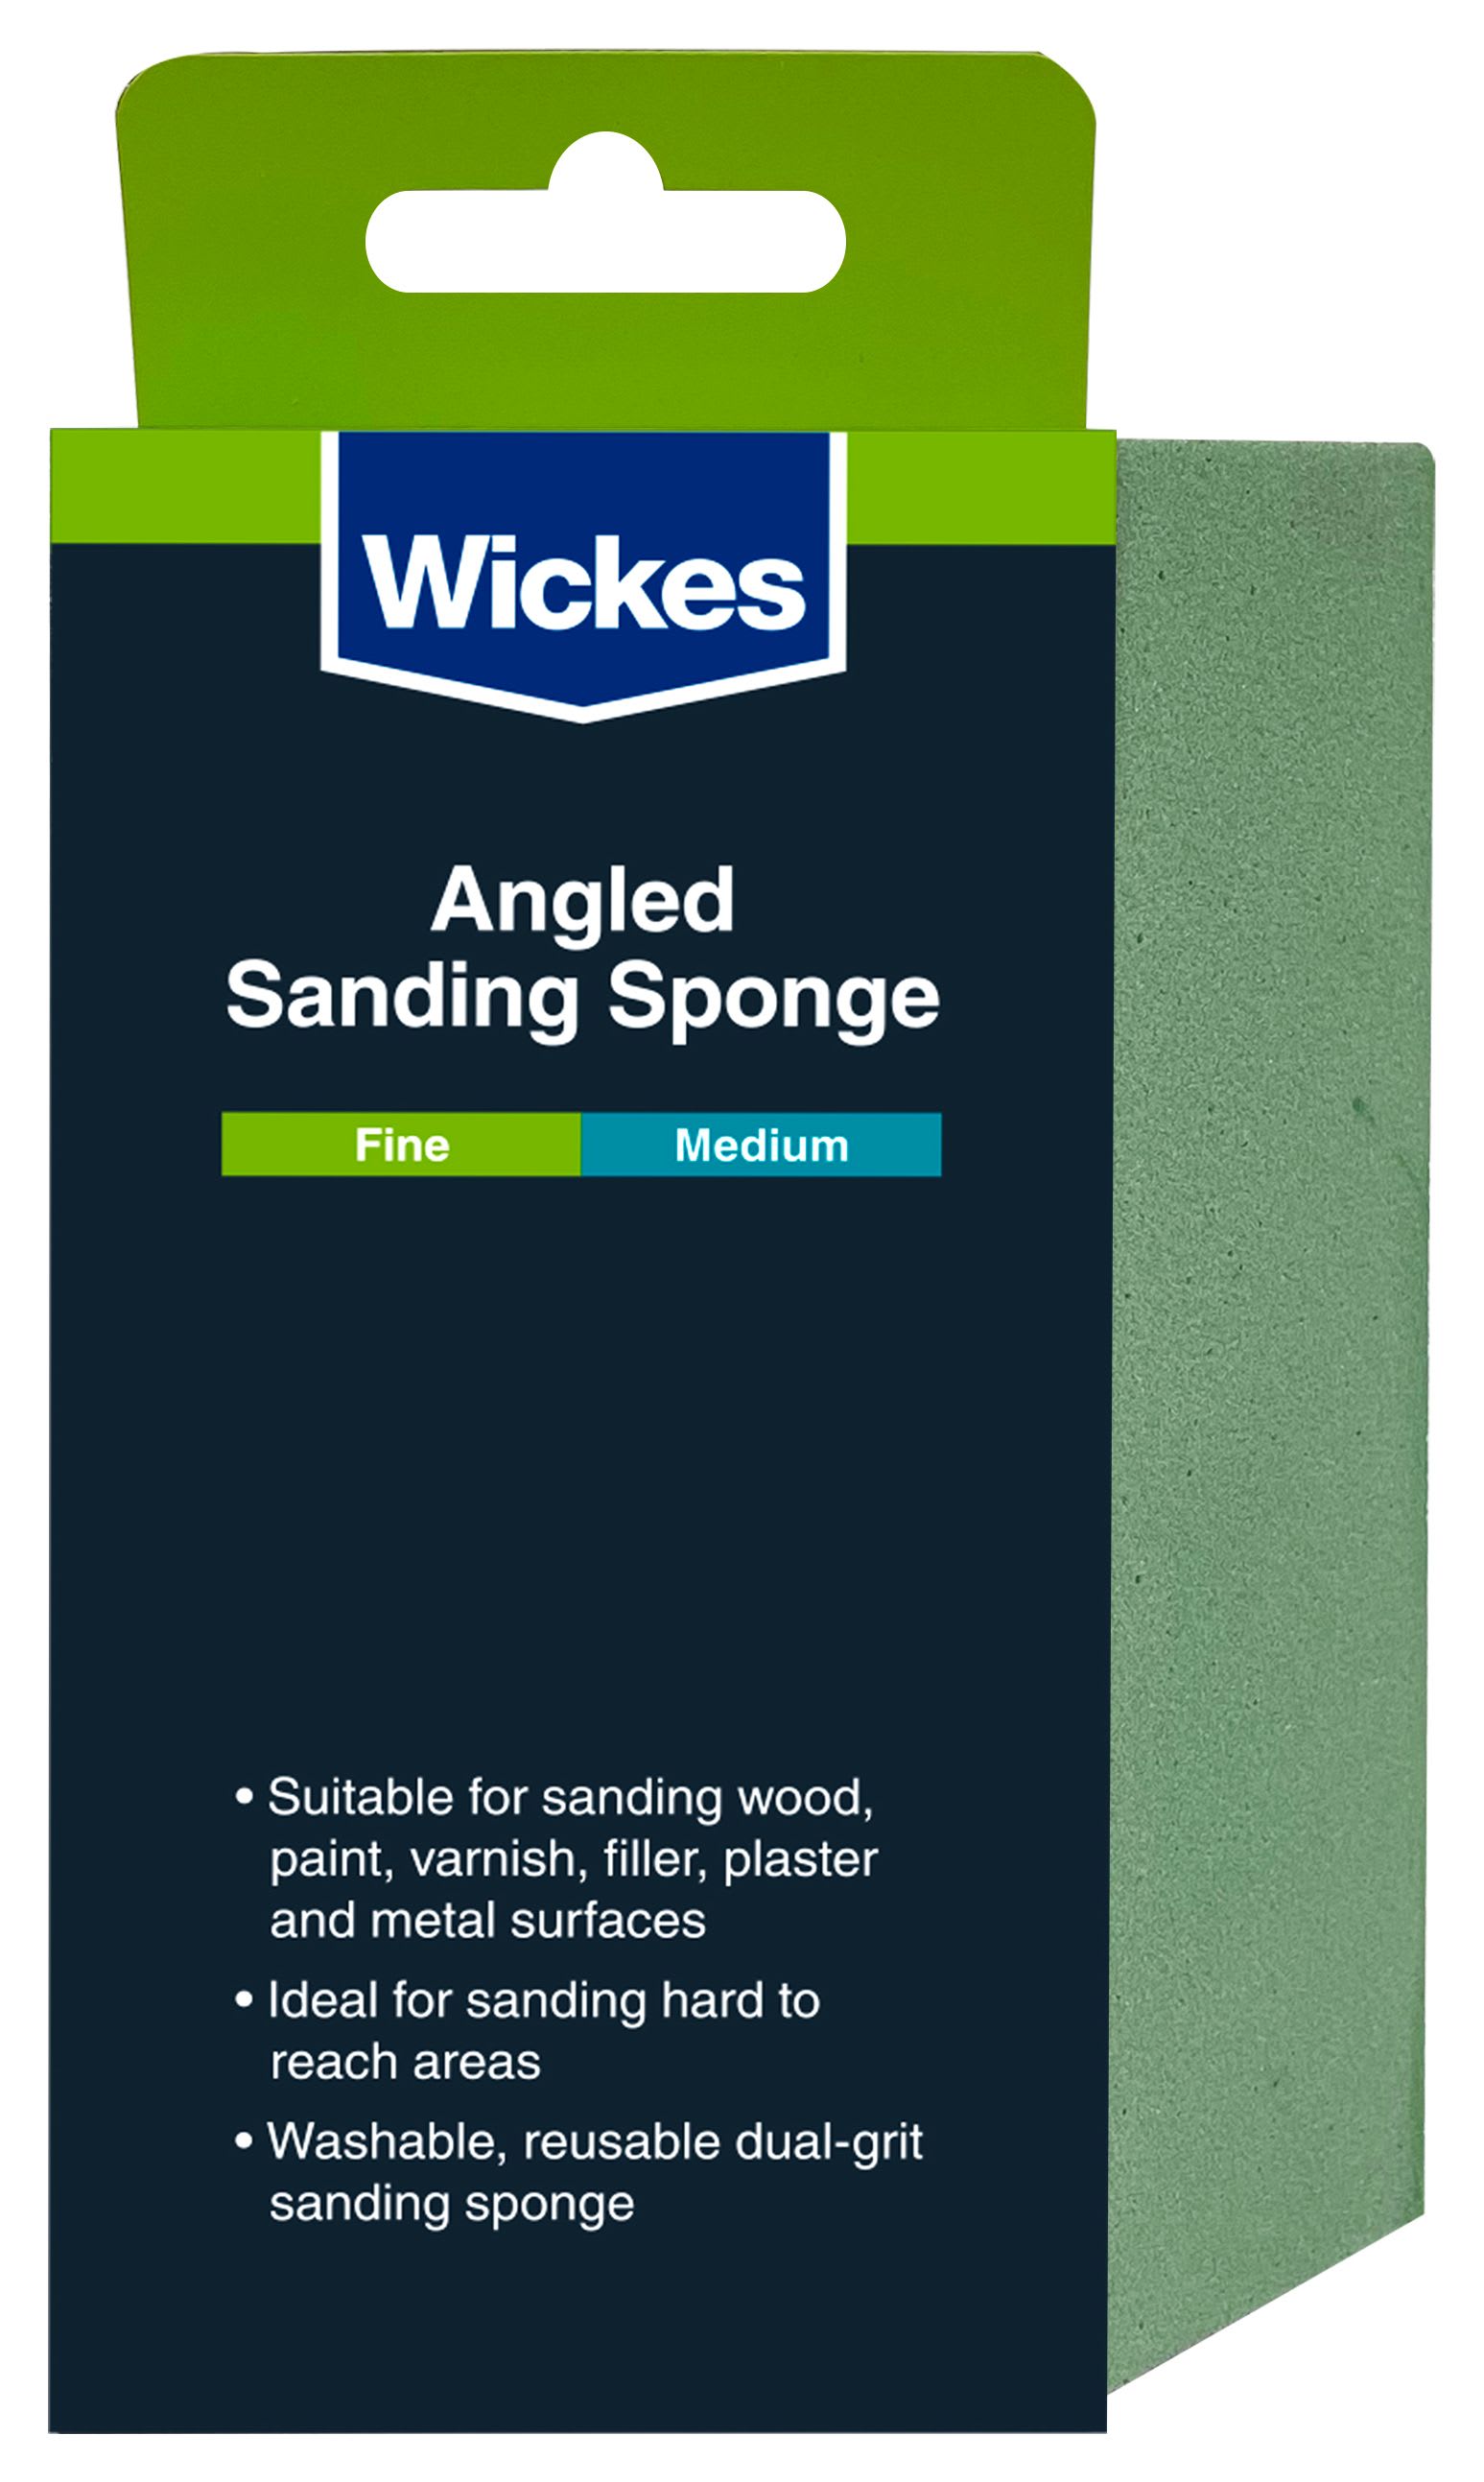 Wickes Angled Sanding Sponge - Fine/Medium